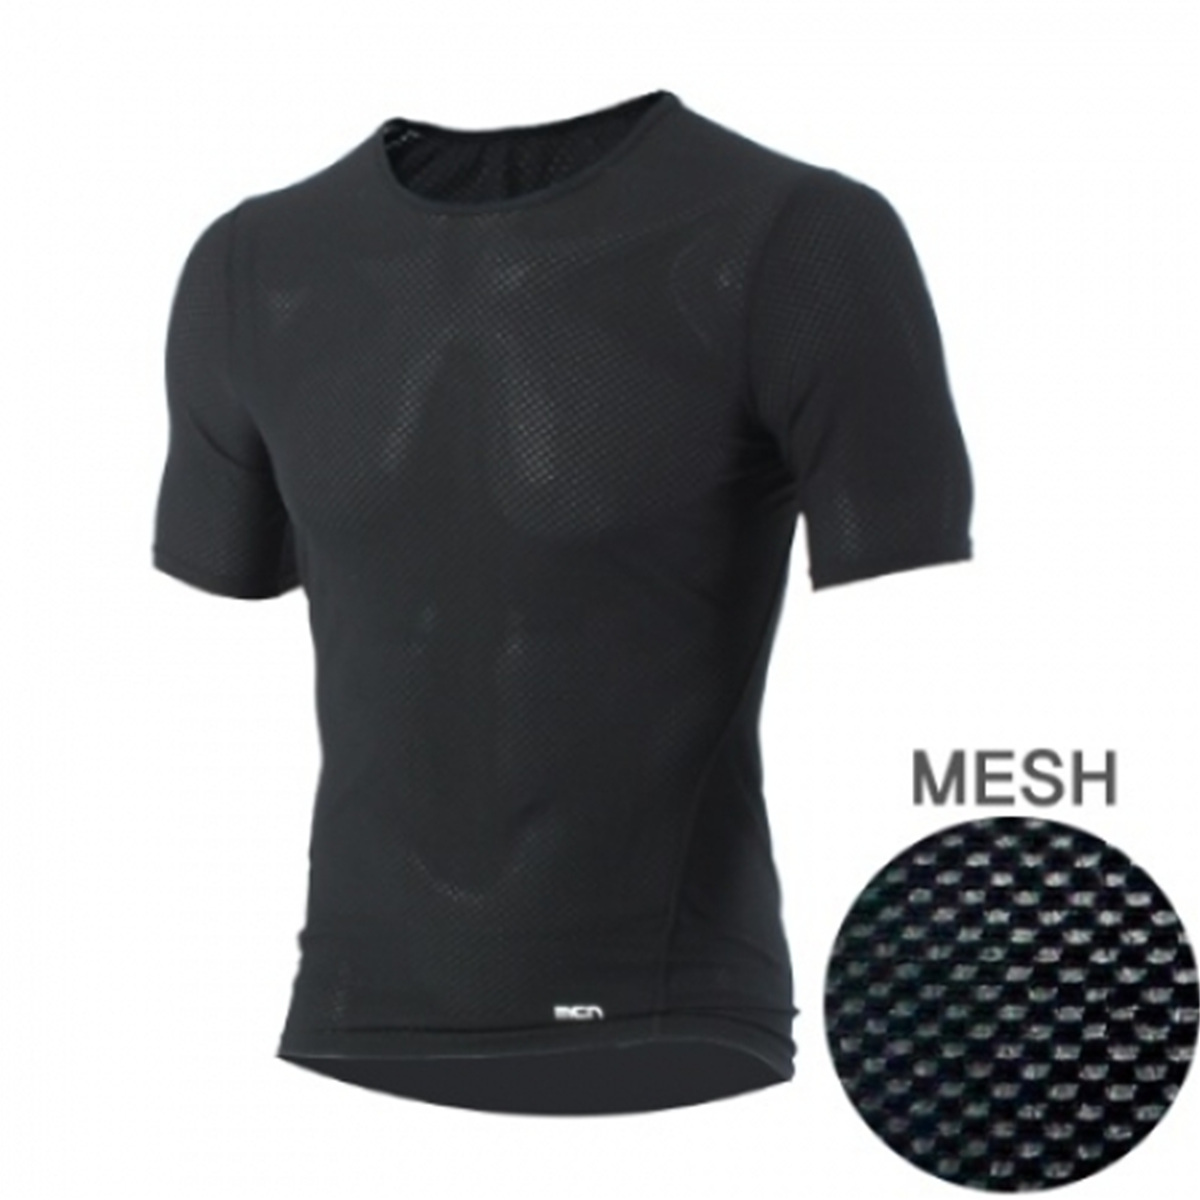 Mcn 여름용 [MTS-KMESH] K-mesh 반팔 티셔츠_블랙